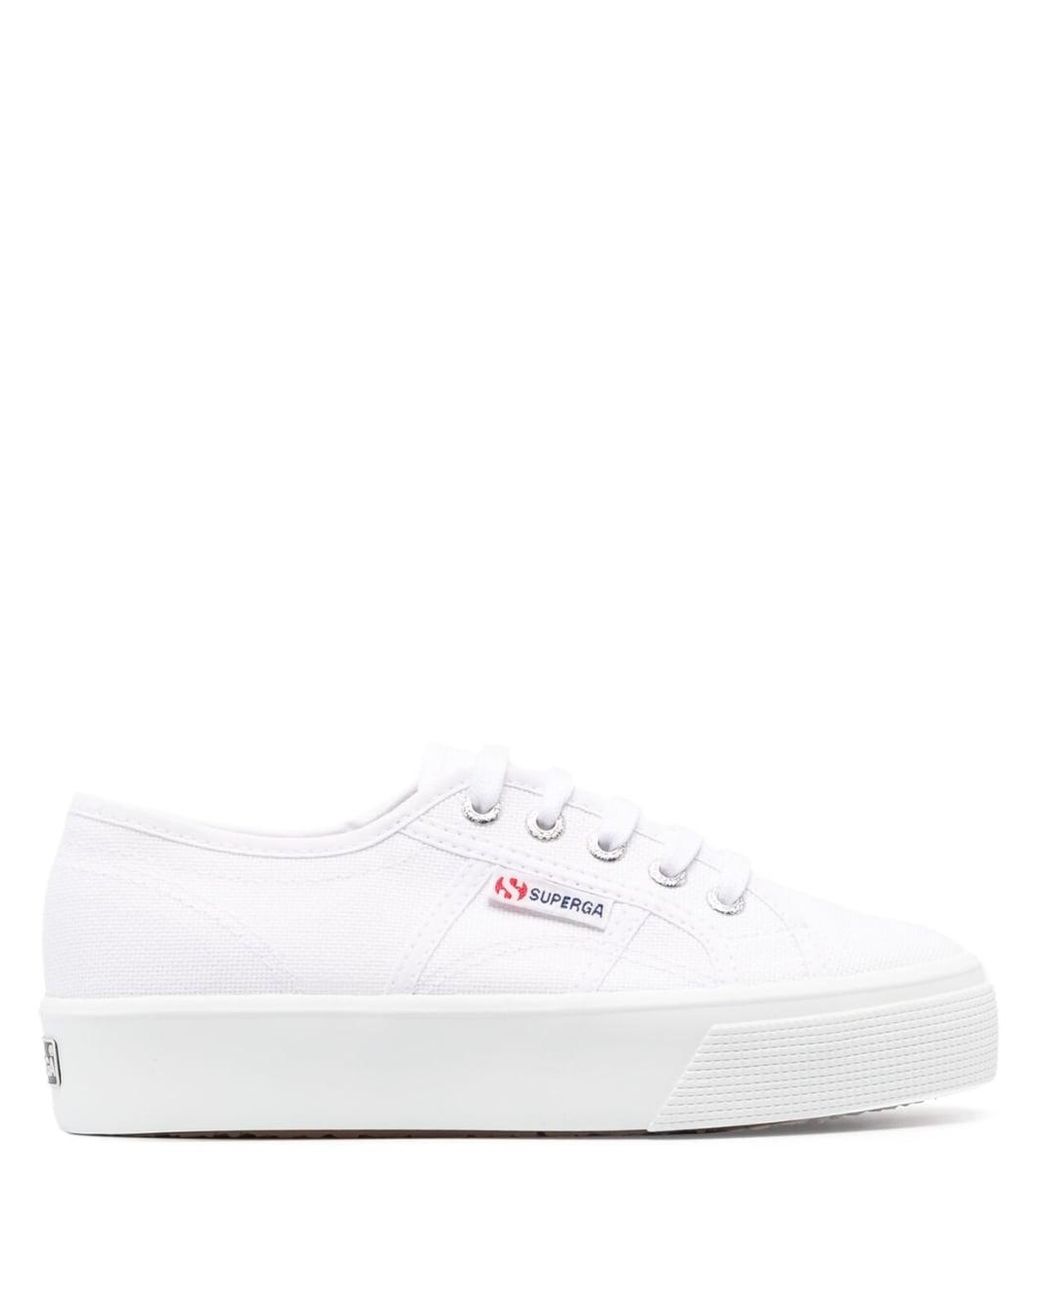 Superga 2730 Platform Sneakers in White | Lyst